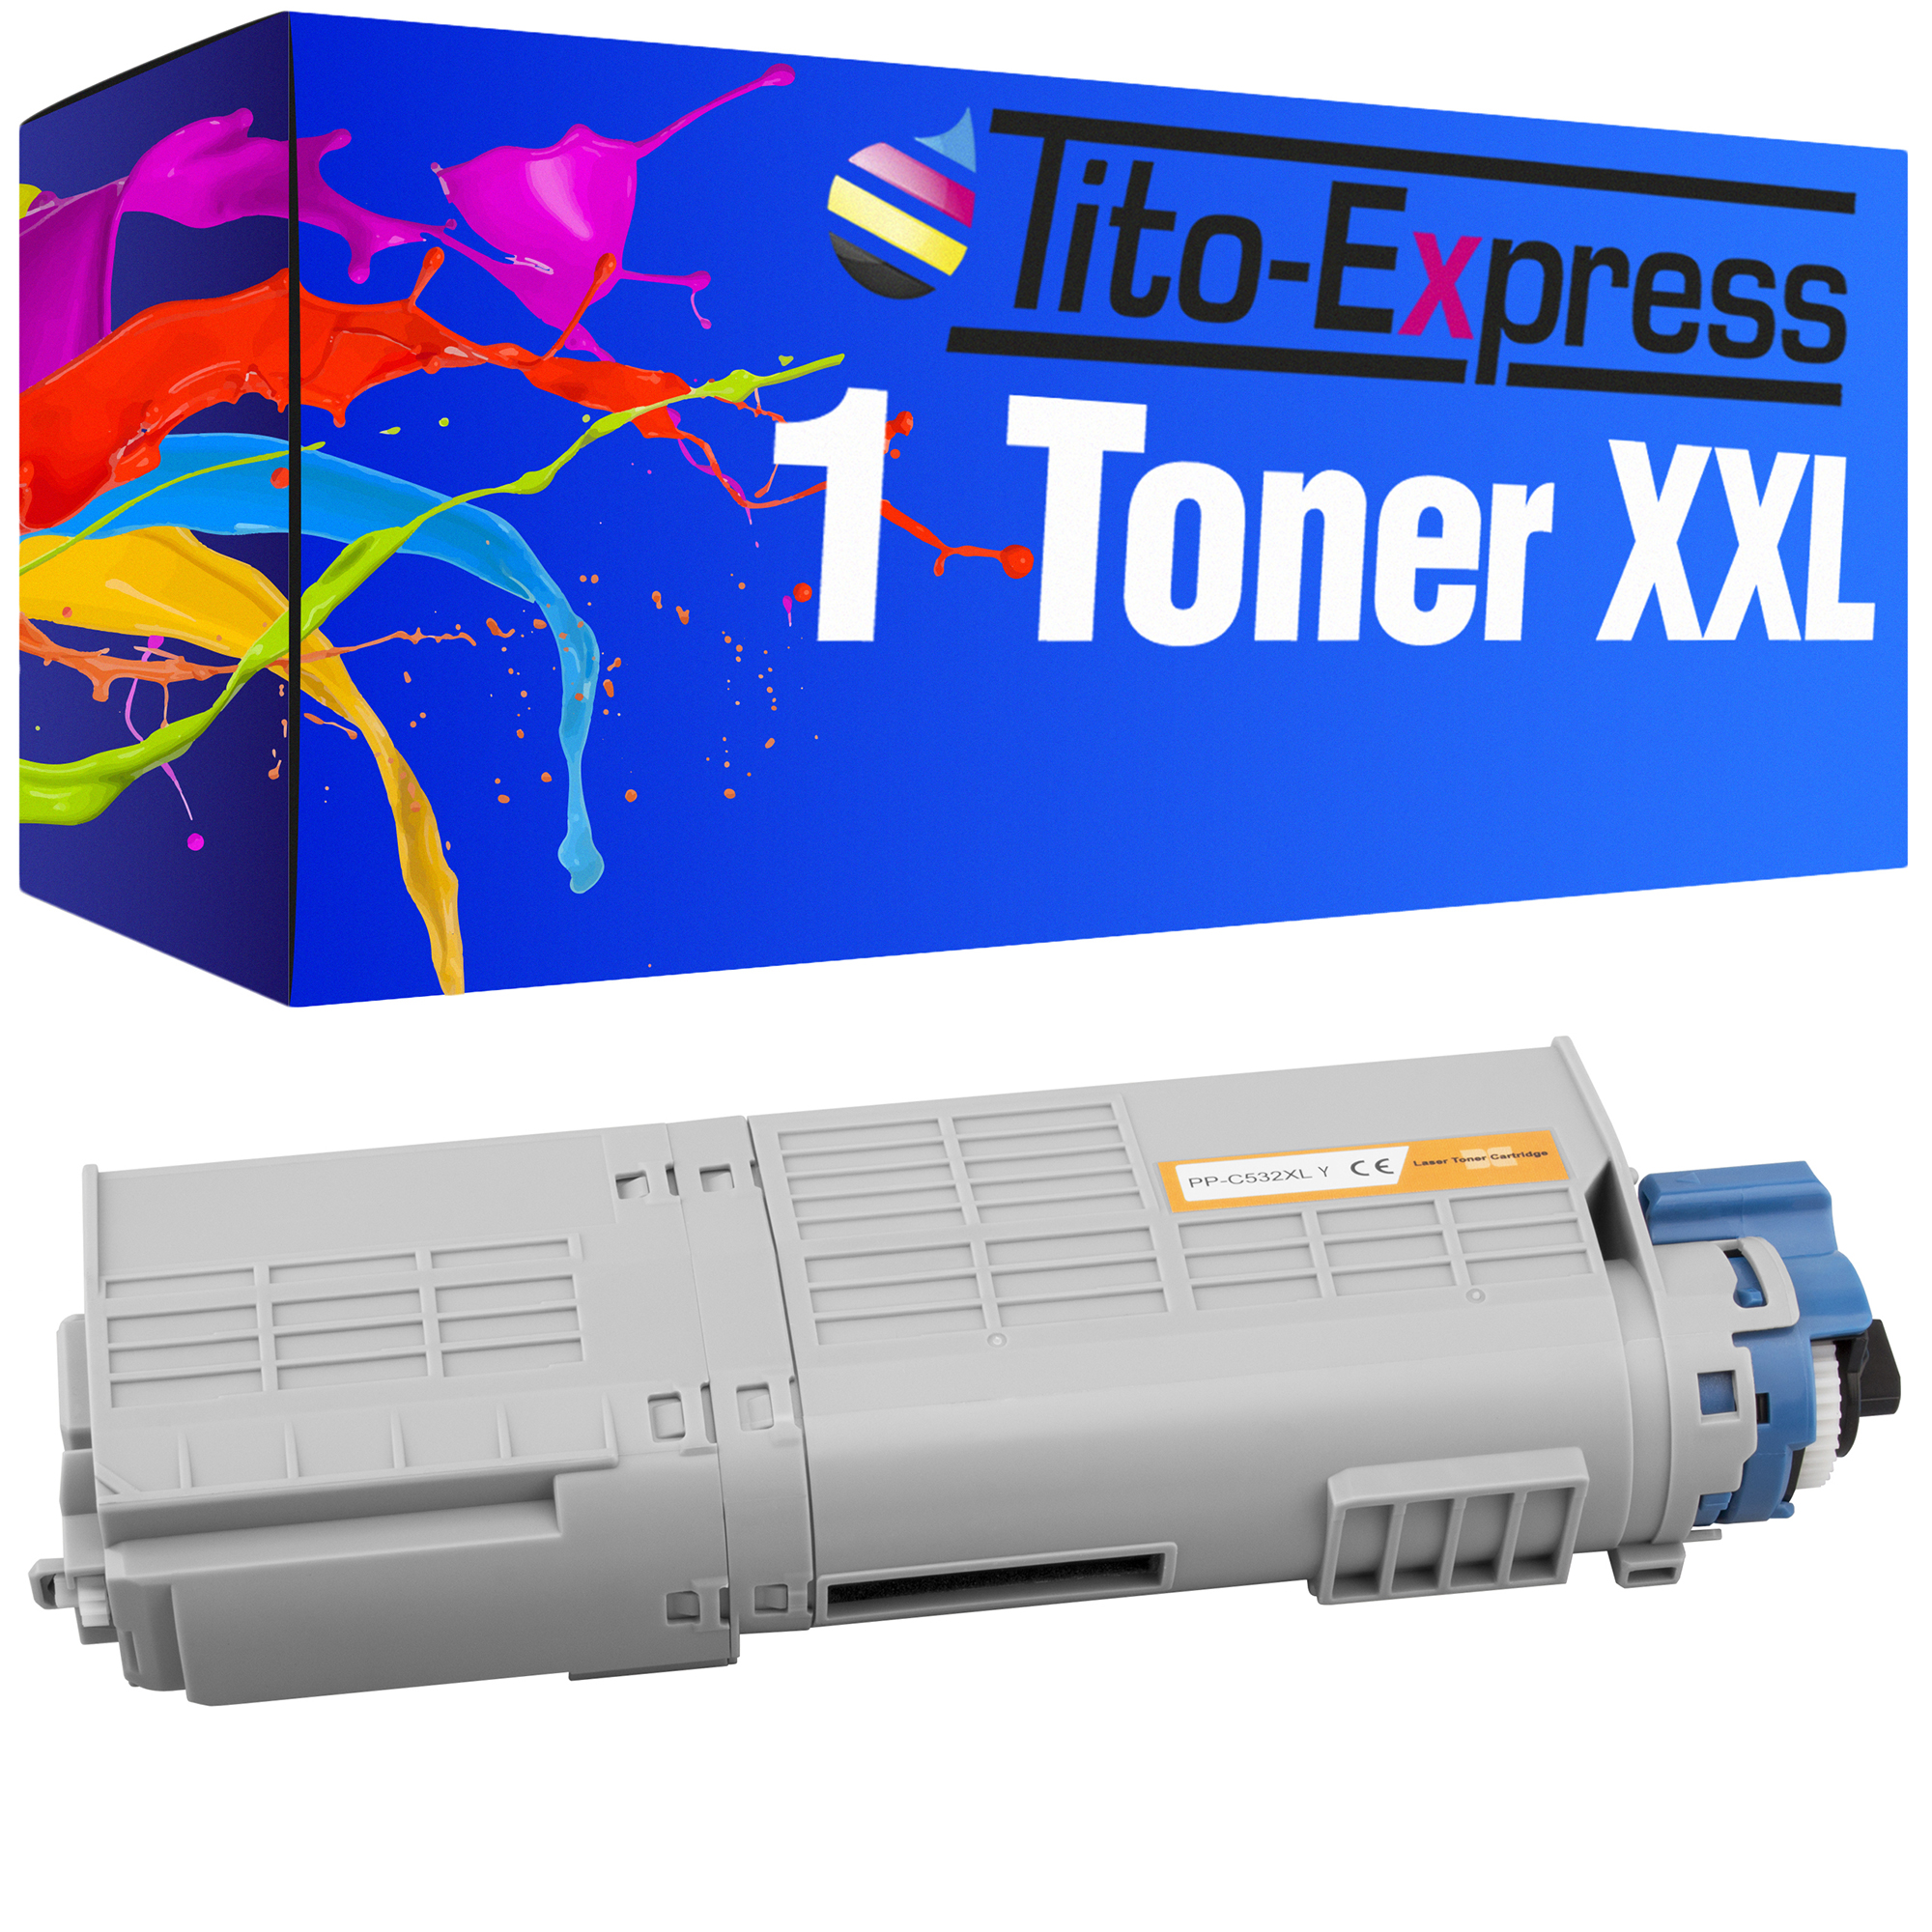 TITO-EXPRESS PLATINUMSERIE (46490605) C532 1 Toner ersetzt Toner yellow OKI